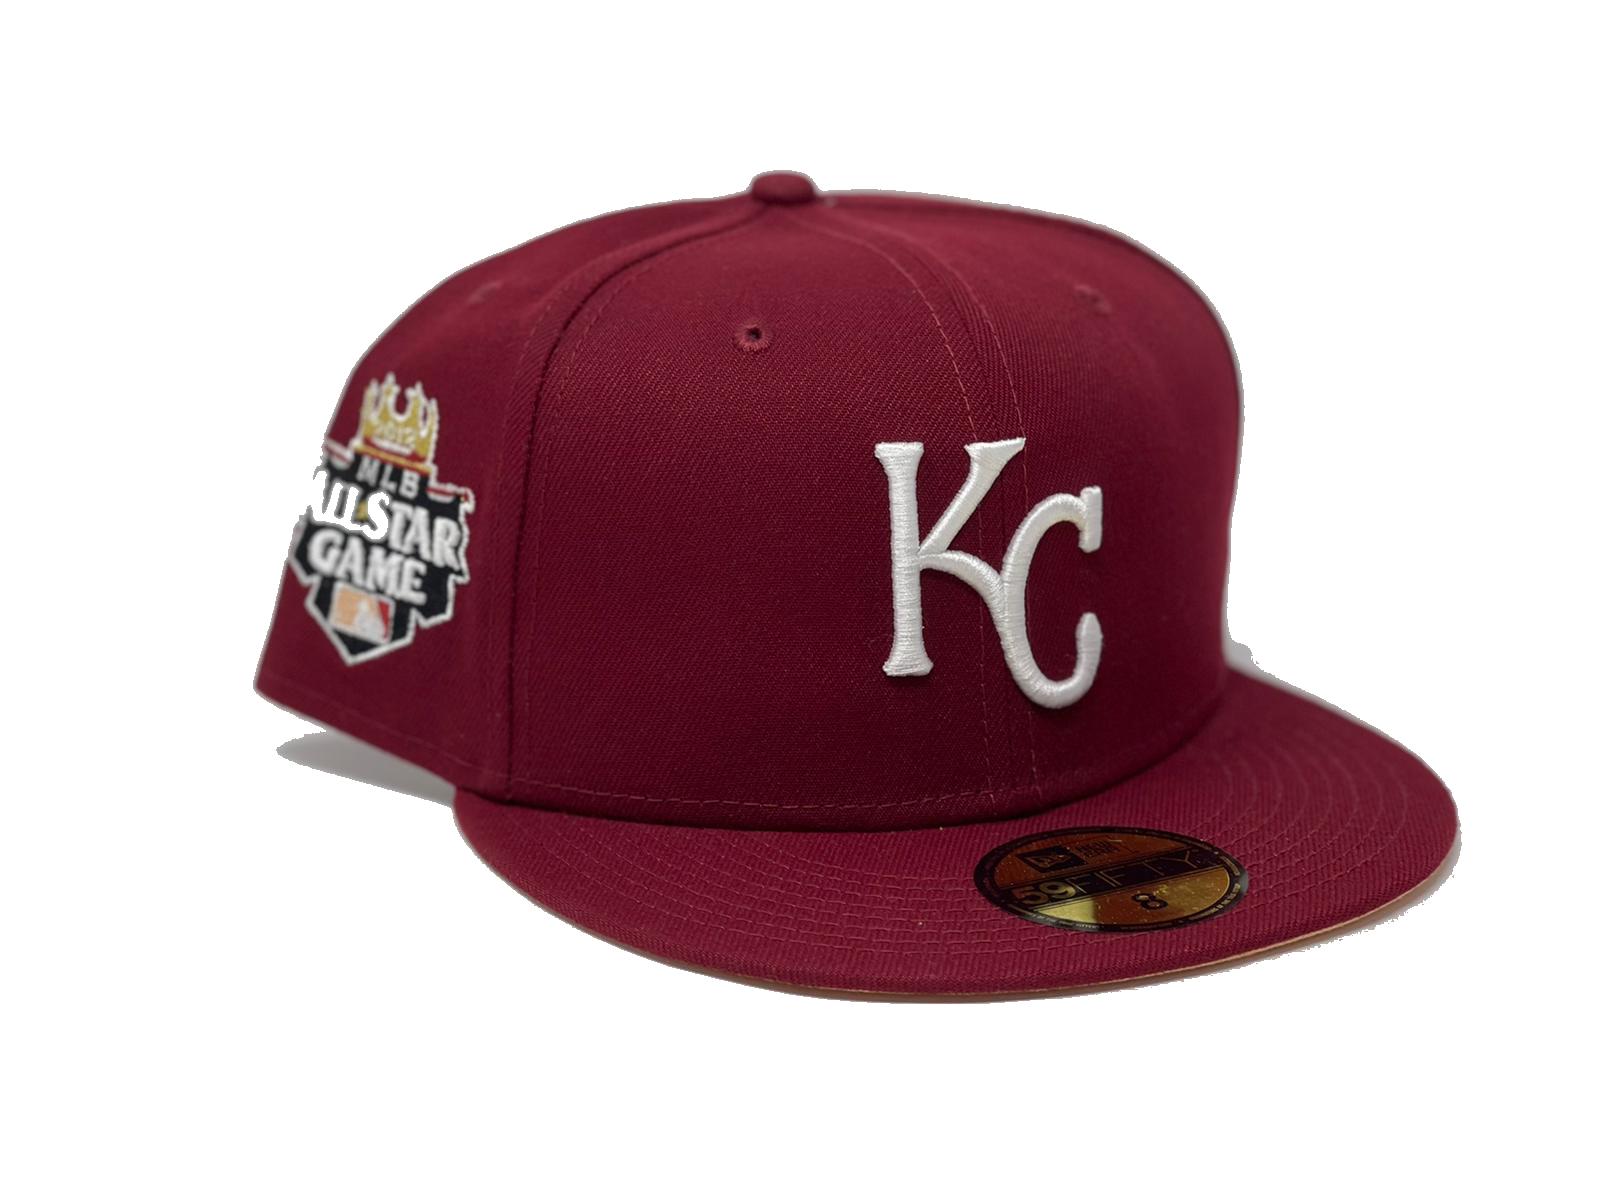 Royals All Star Game 2012 Kansas City large hat cap blue white '47